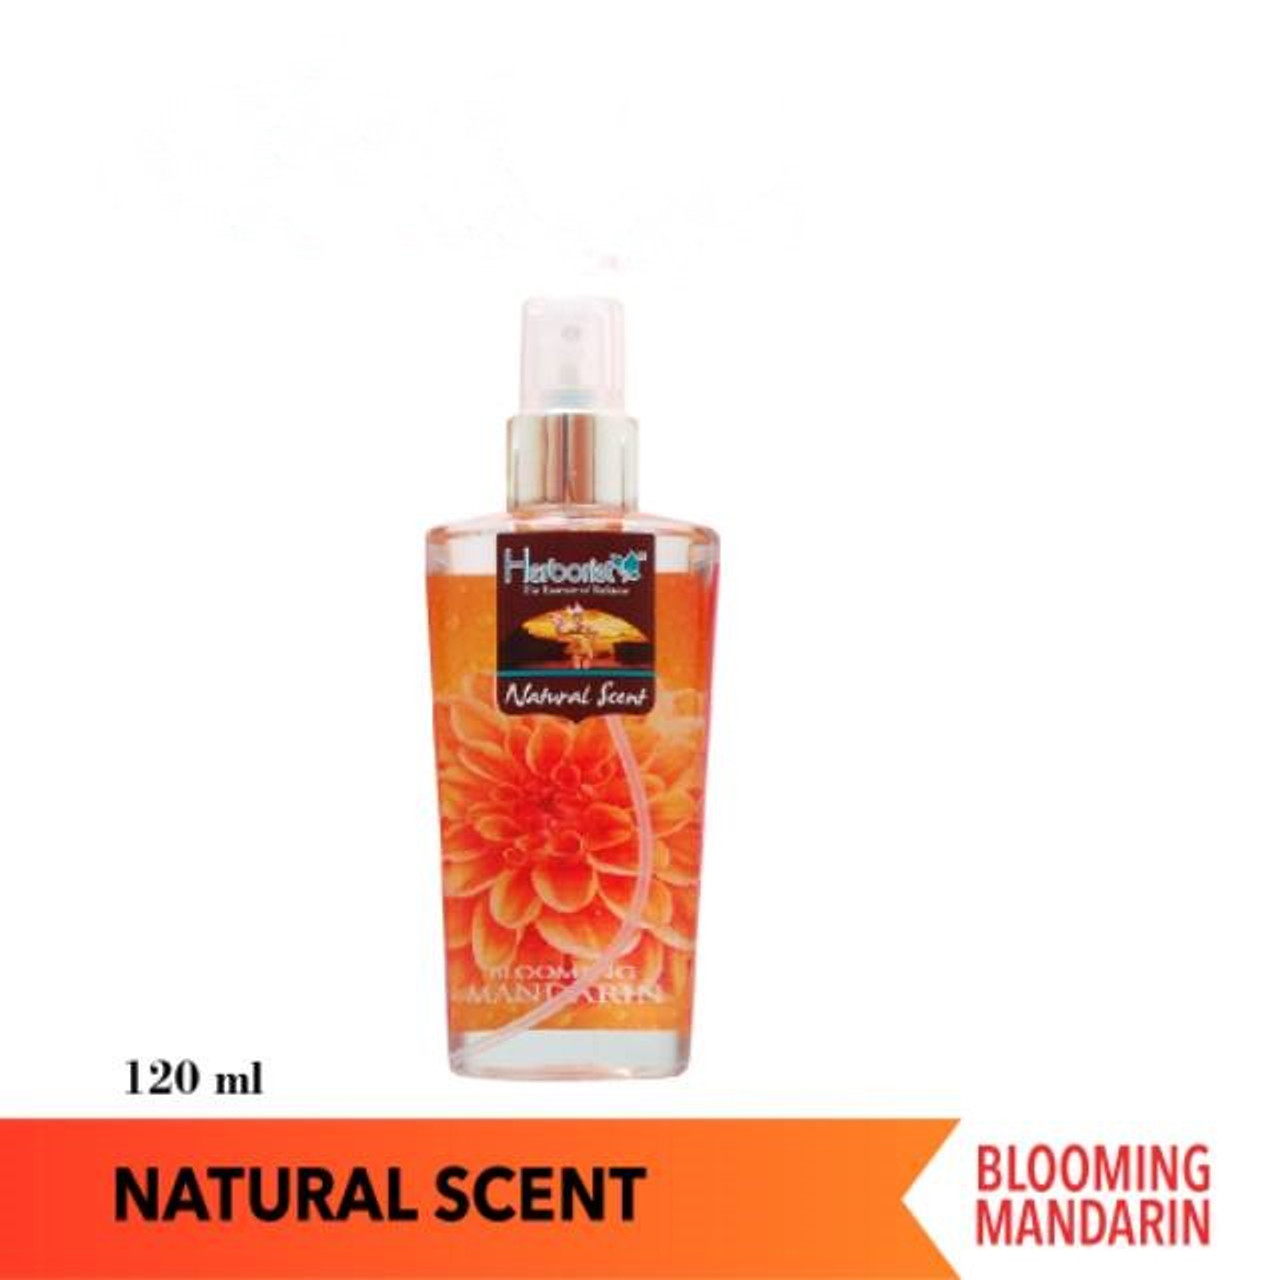 Herborist Natural Body Scent Perfume Blooming Mandarin 120ml